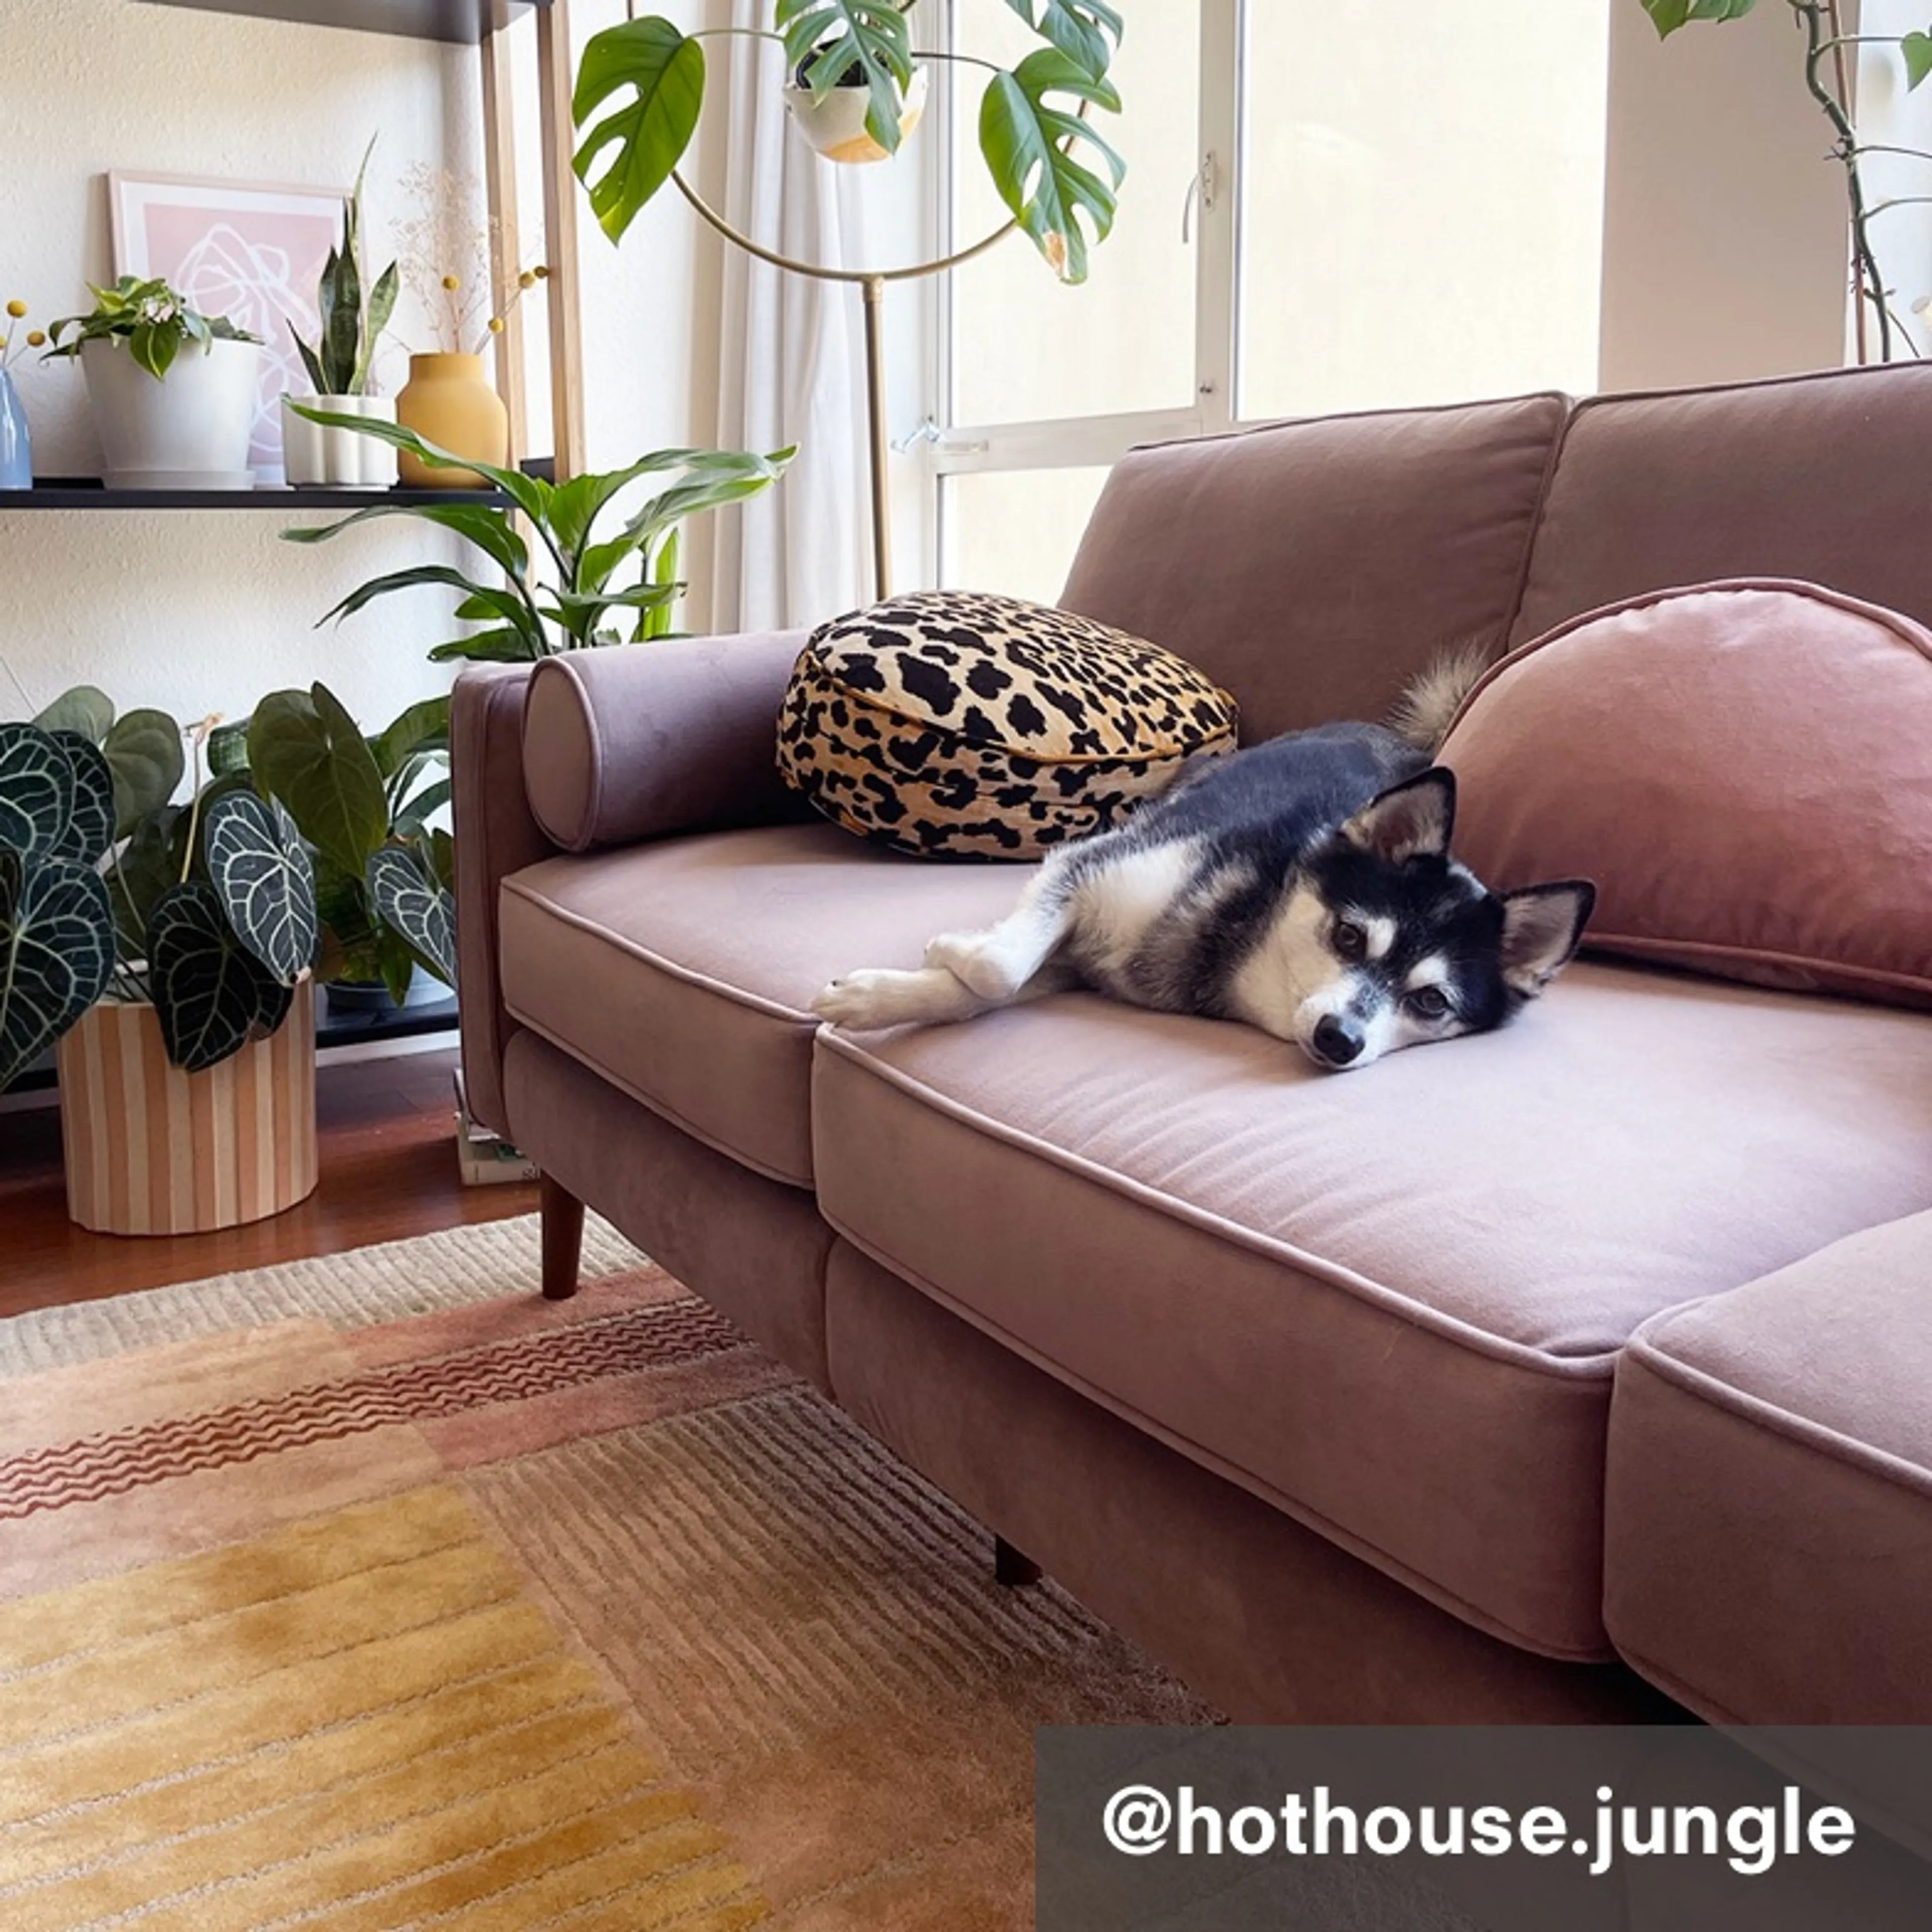 Nomad Velvet Sofa from @hothouse.jungle